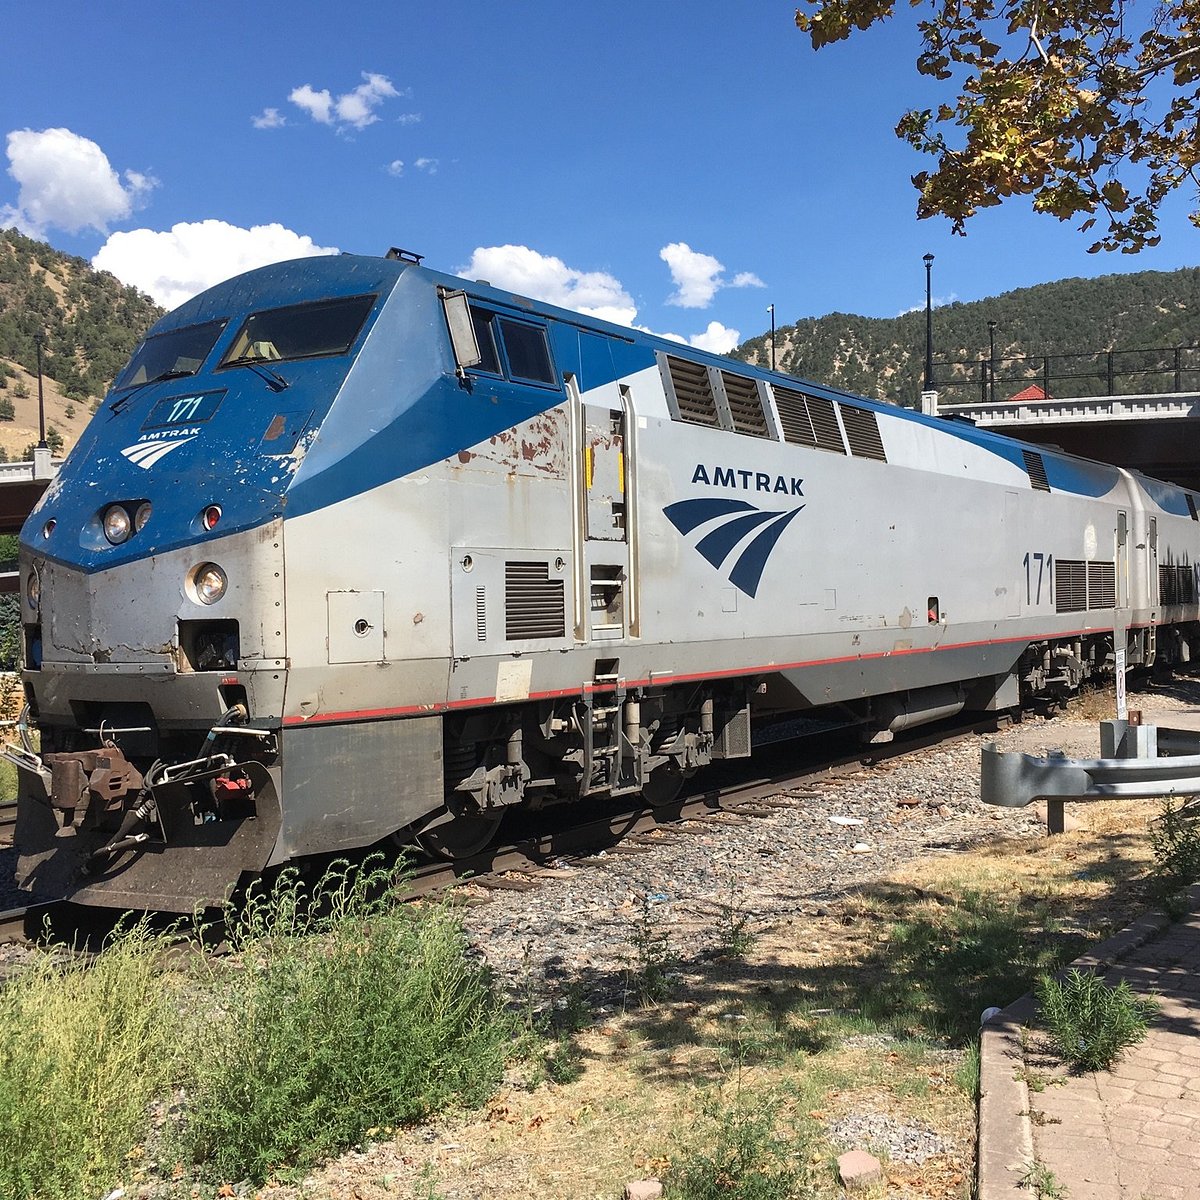 Amtrak Sacramento: 10 Things To Know About The Sacramento Valley